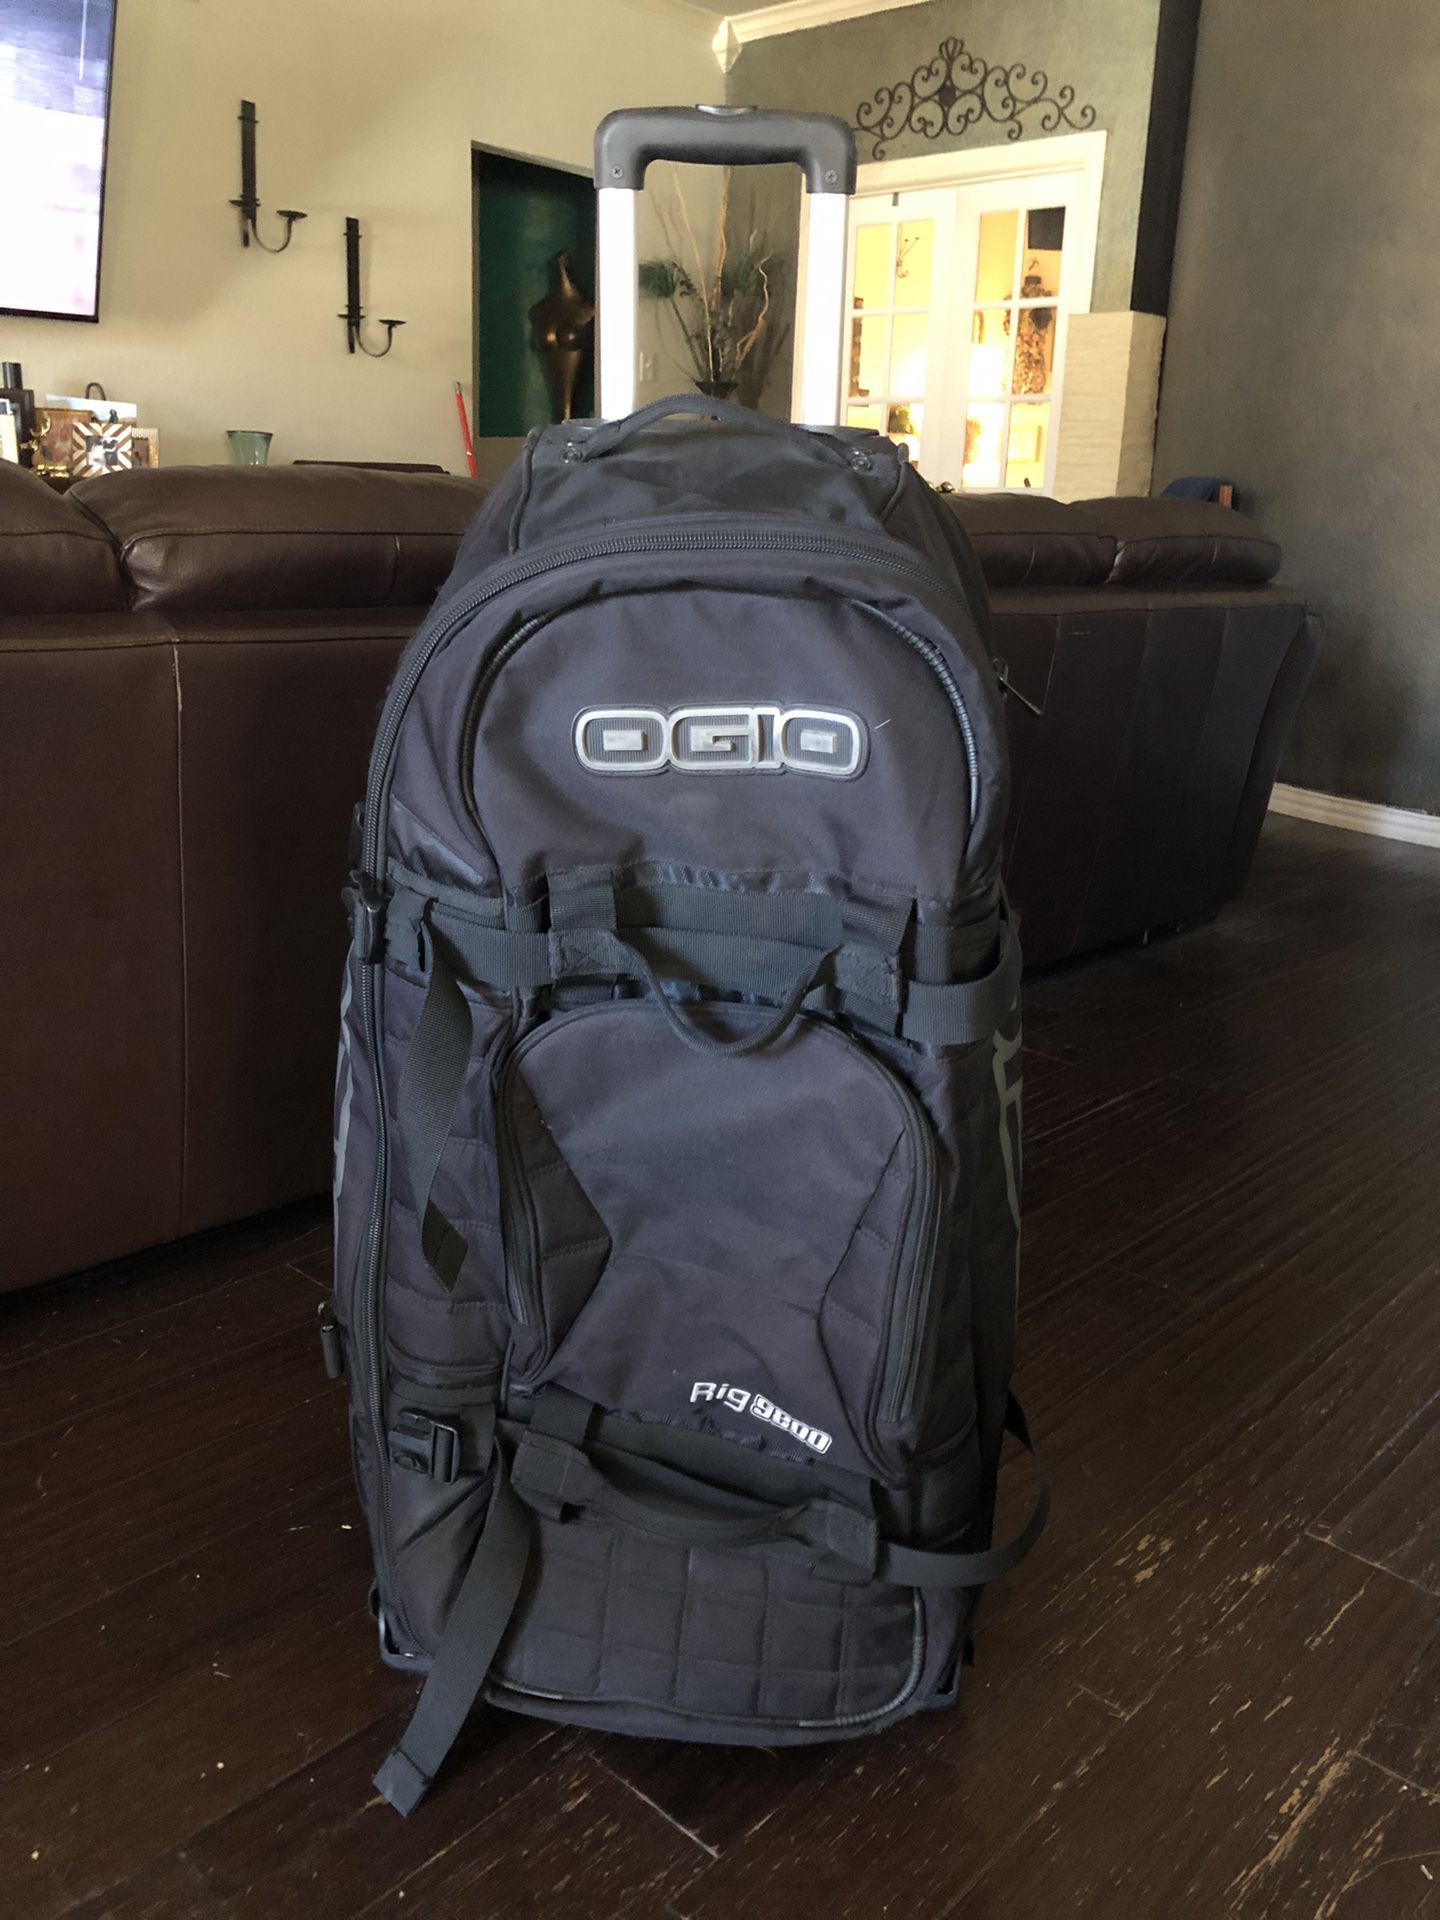 OGIO Rig 9800 Gear Bag Sled Wheeled Rolling Duffle Travel Suitcase Black